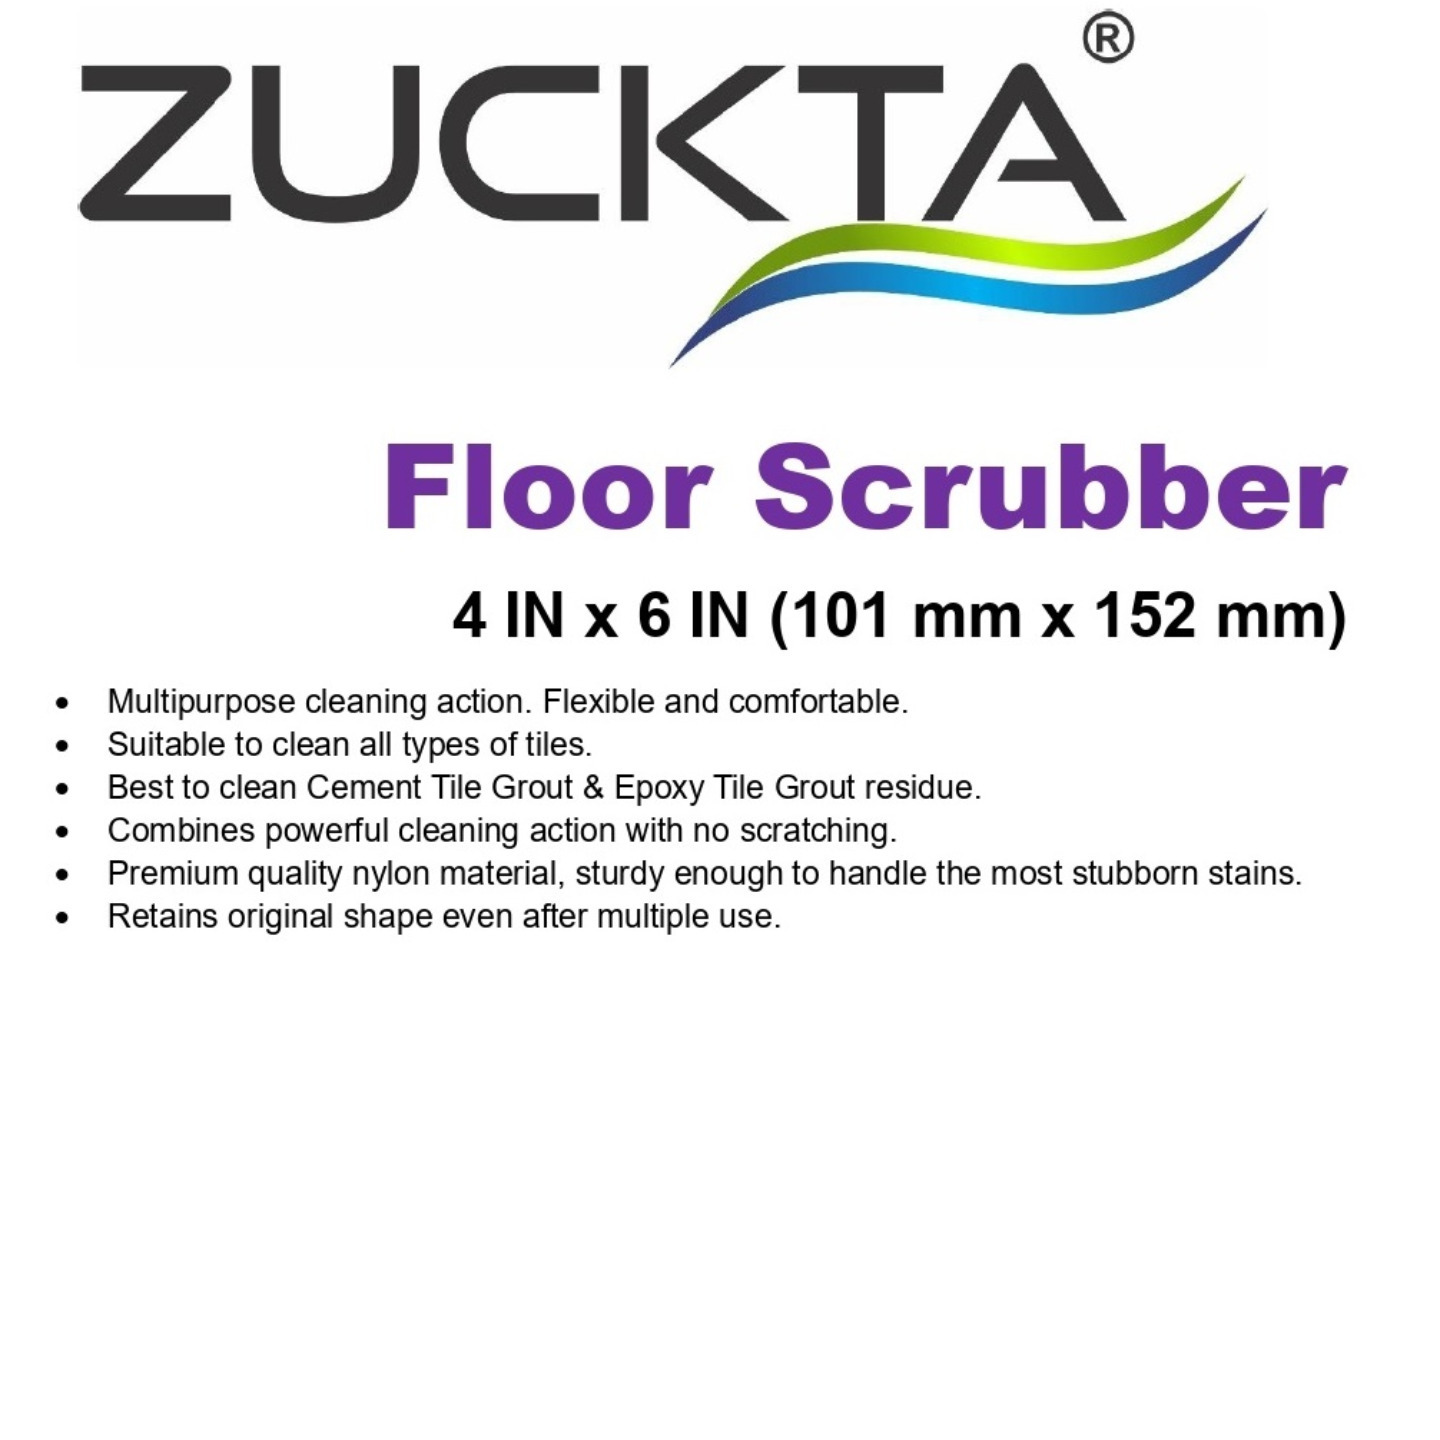 ZUCKTA Floor Scrubber